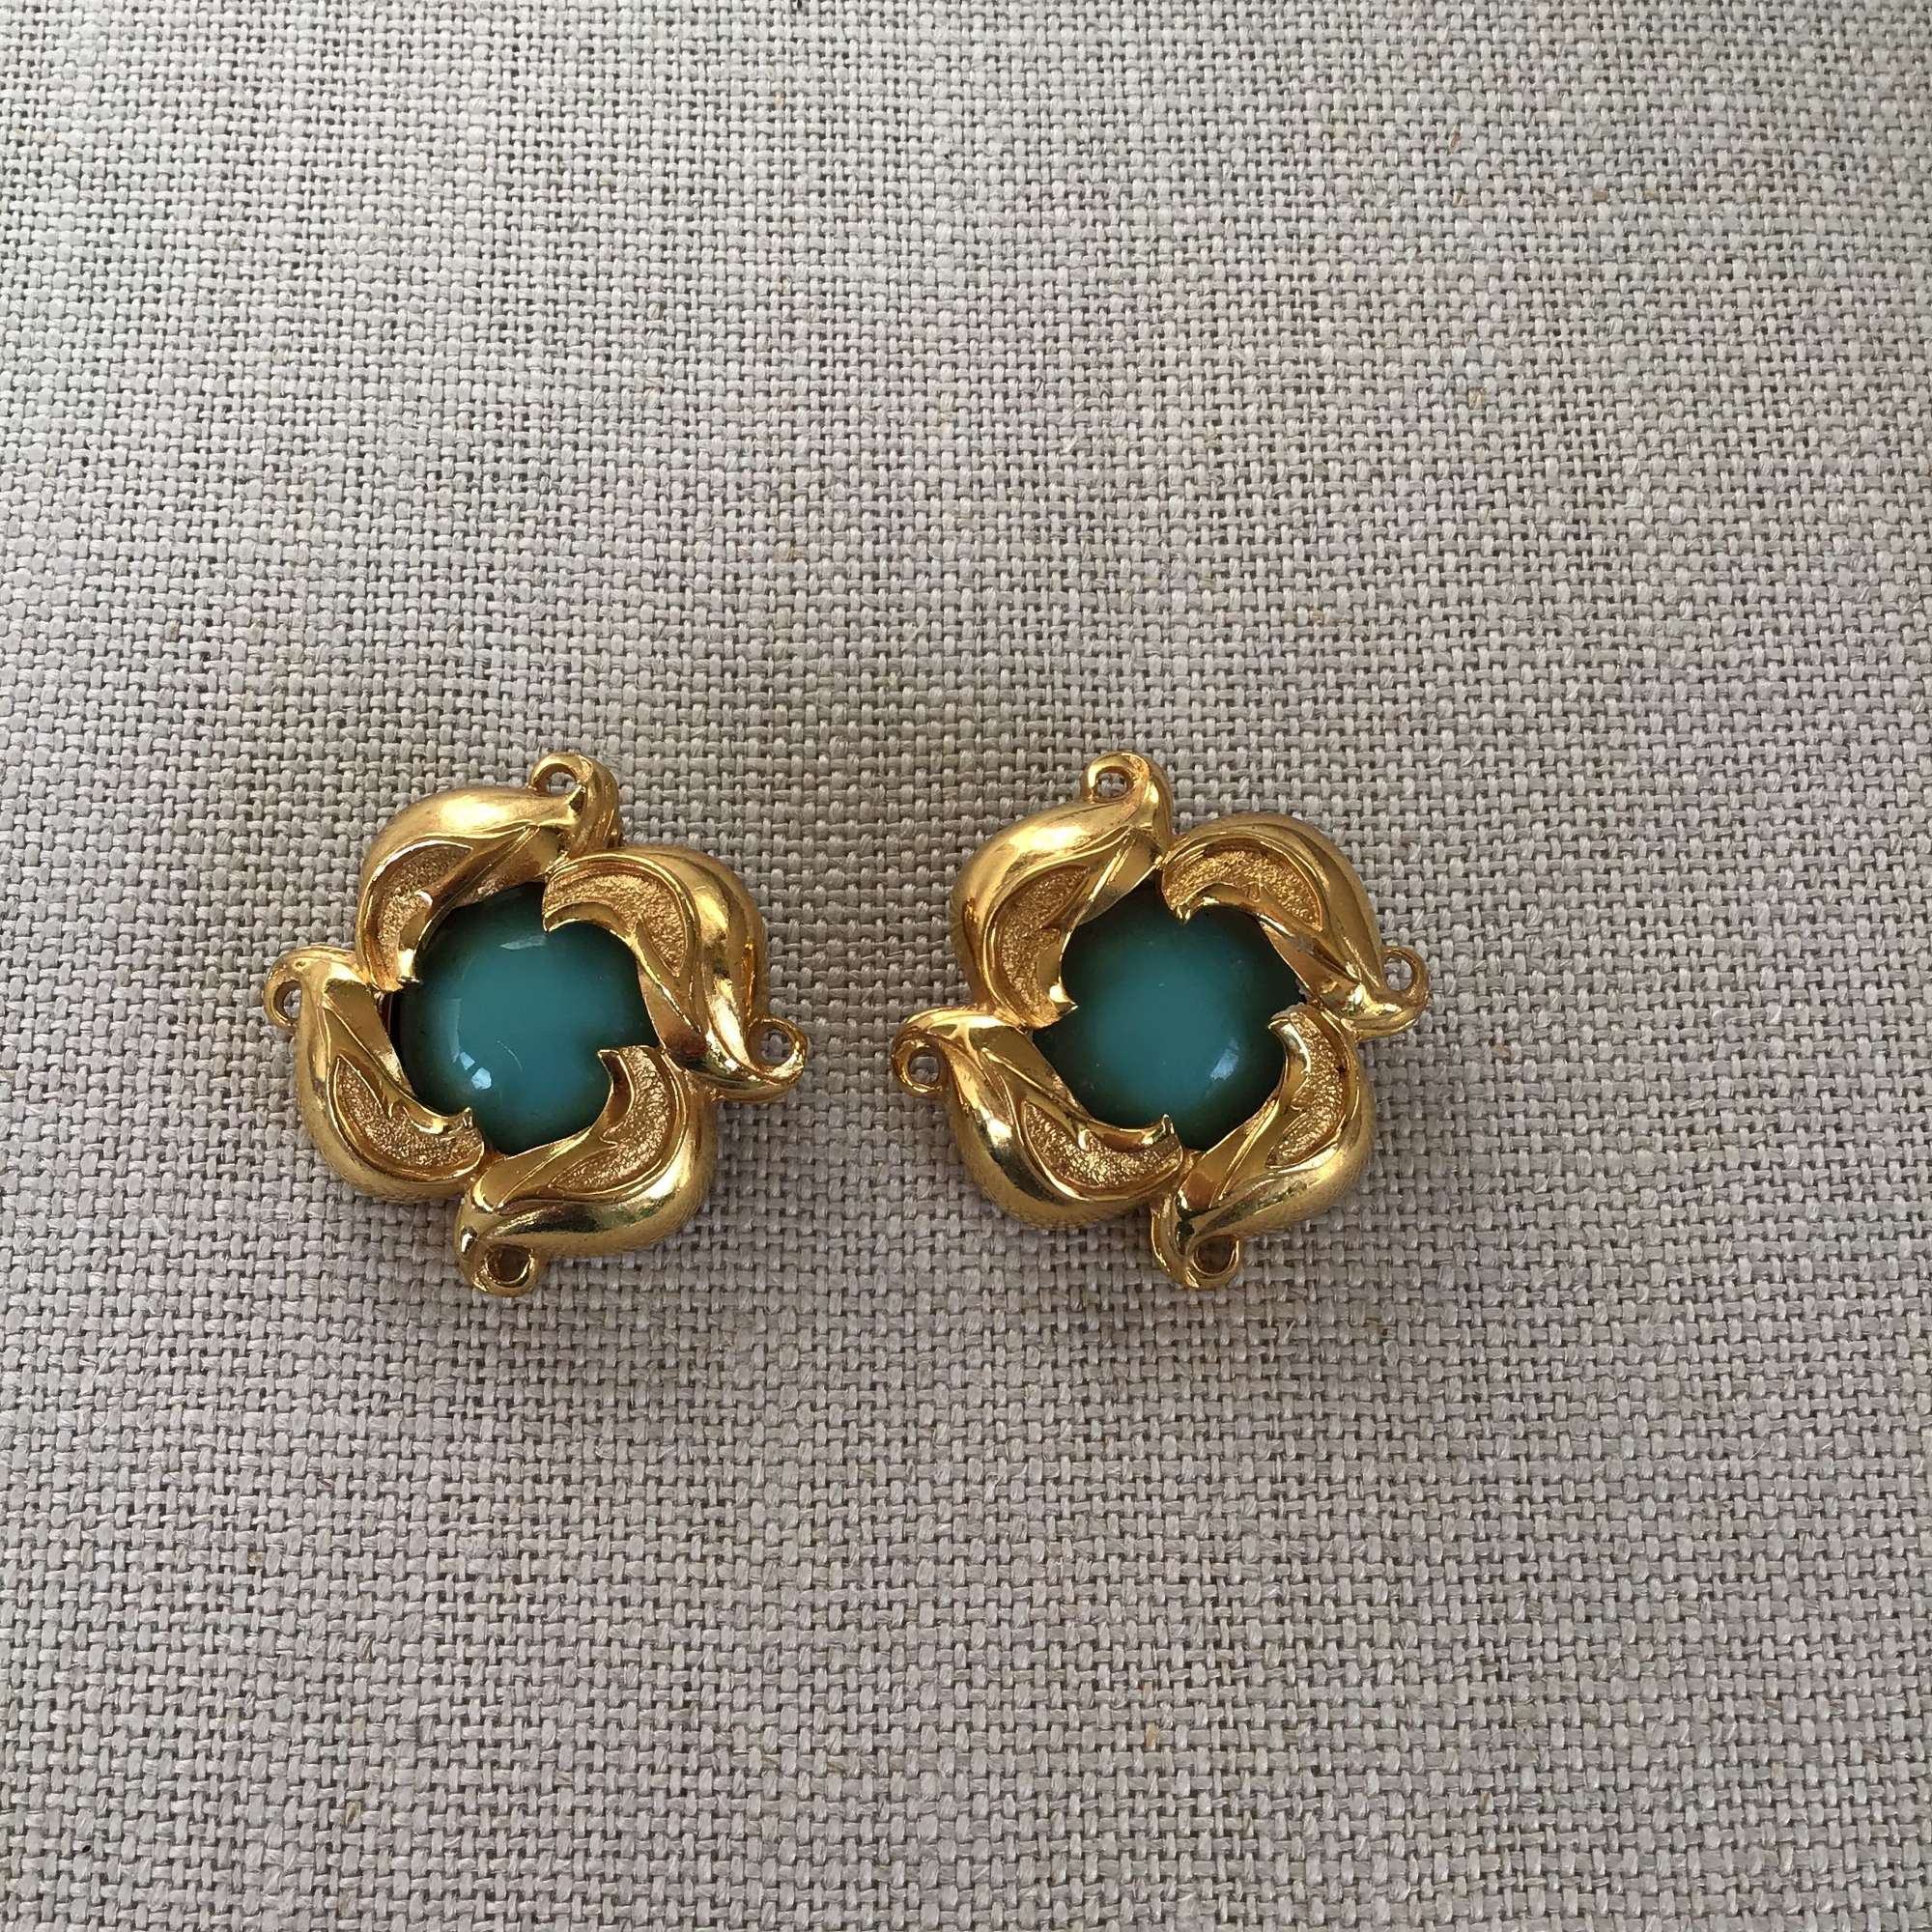 Vintage Fendi turquoise clip earrings